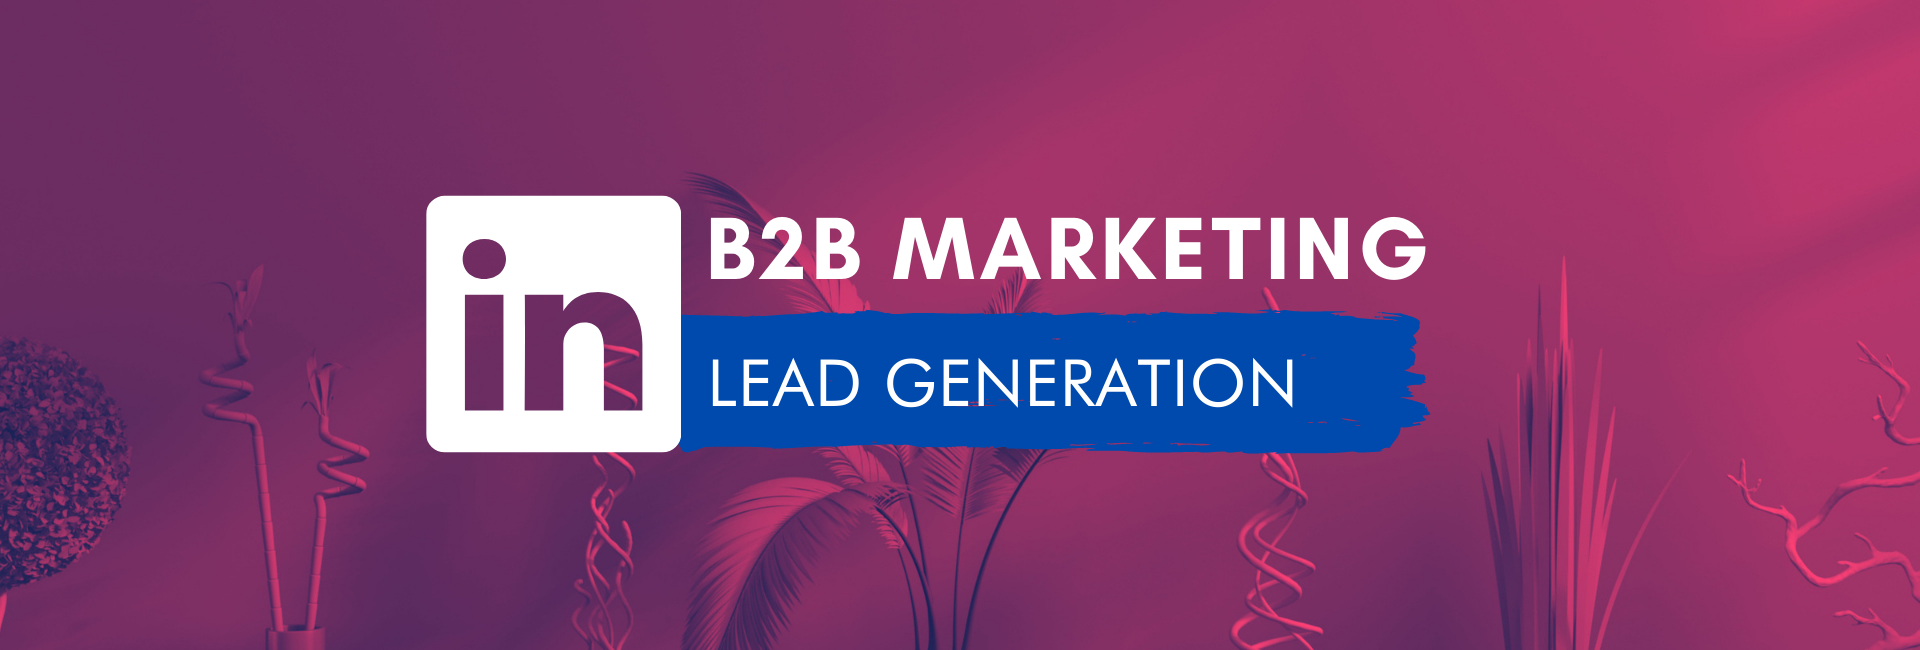 LinkedIn B2B Marketing Practices for Lead Generation